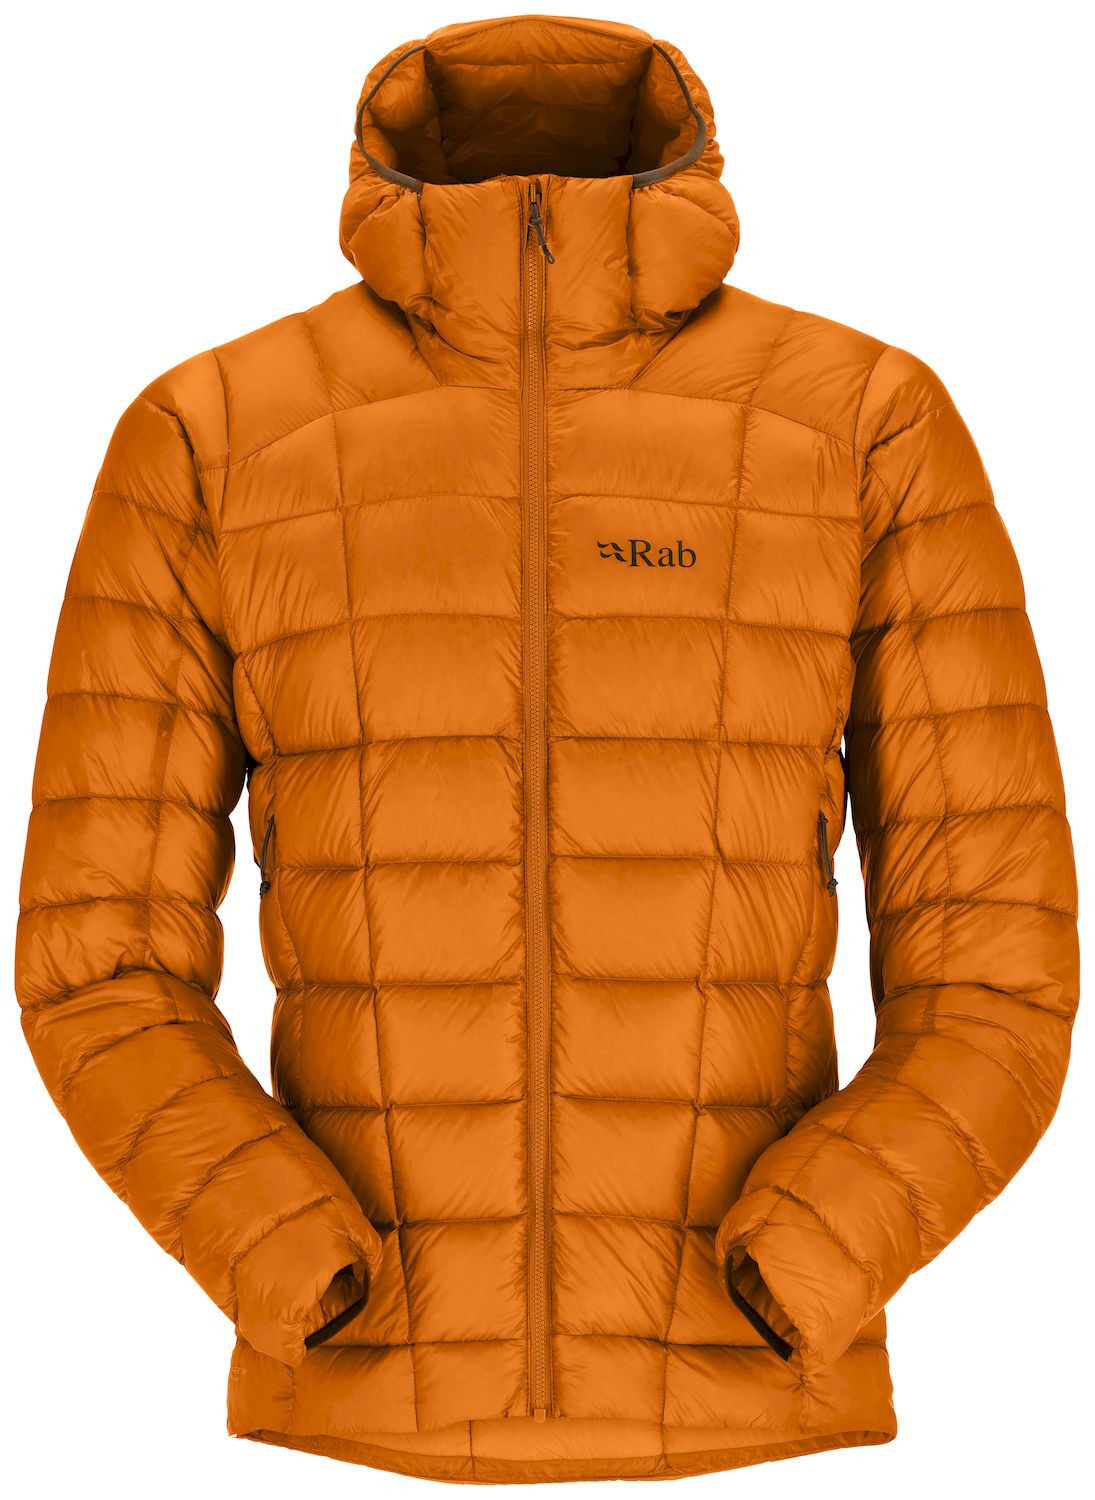 Rab Mythic Alpine Jacket - Down jacket - Men's